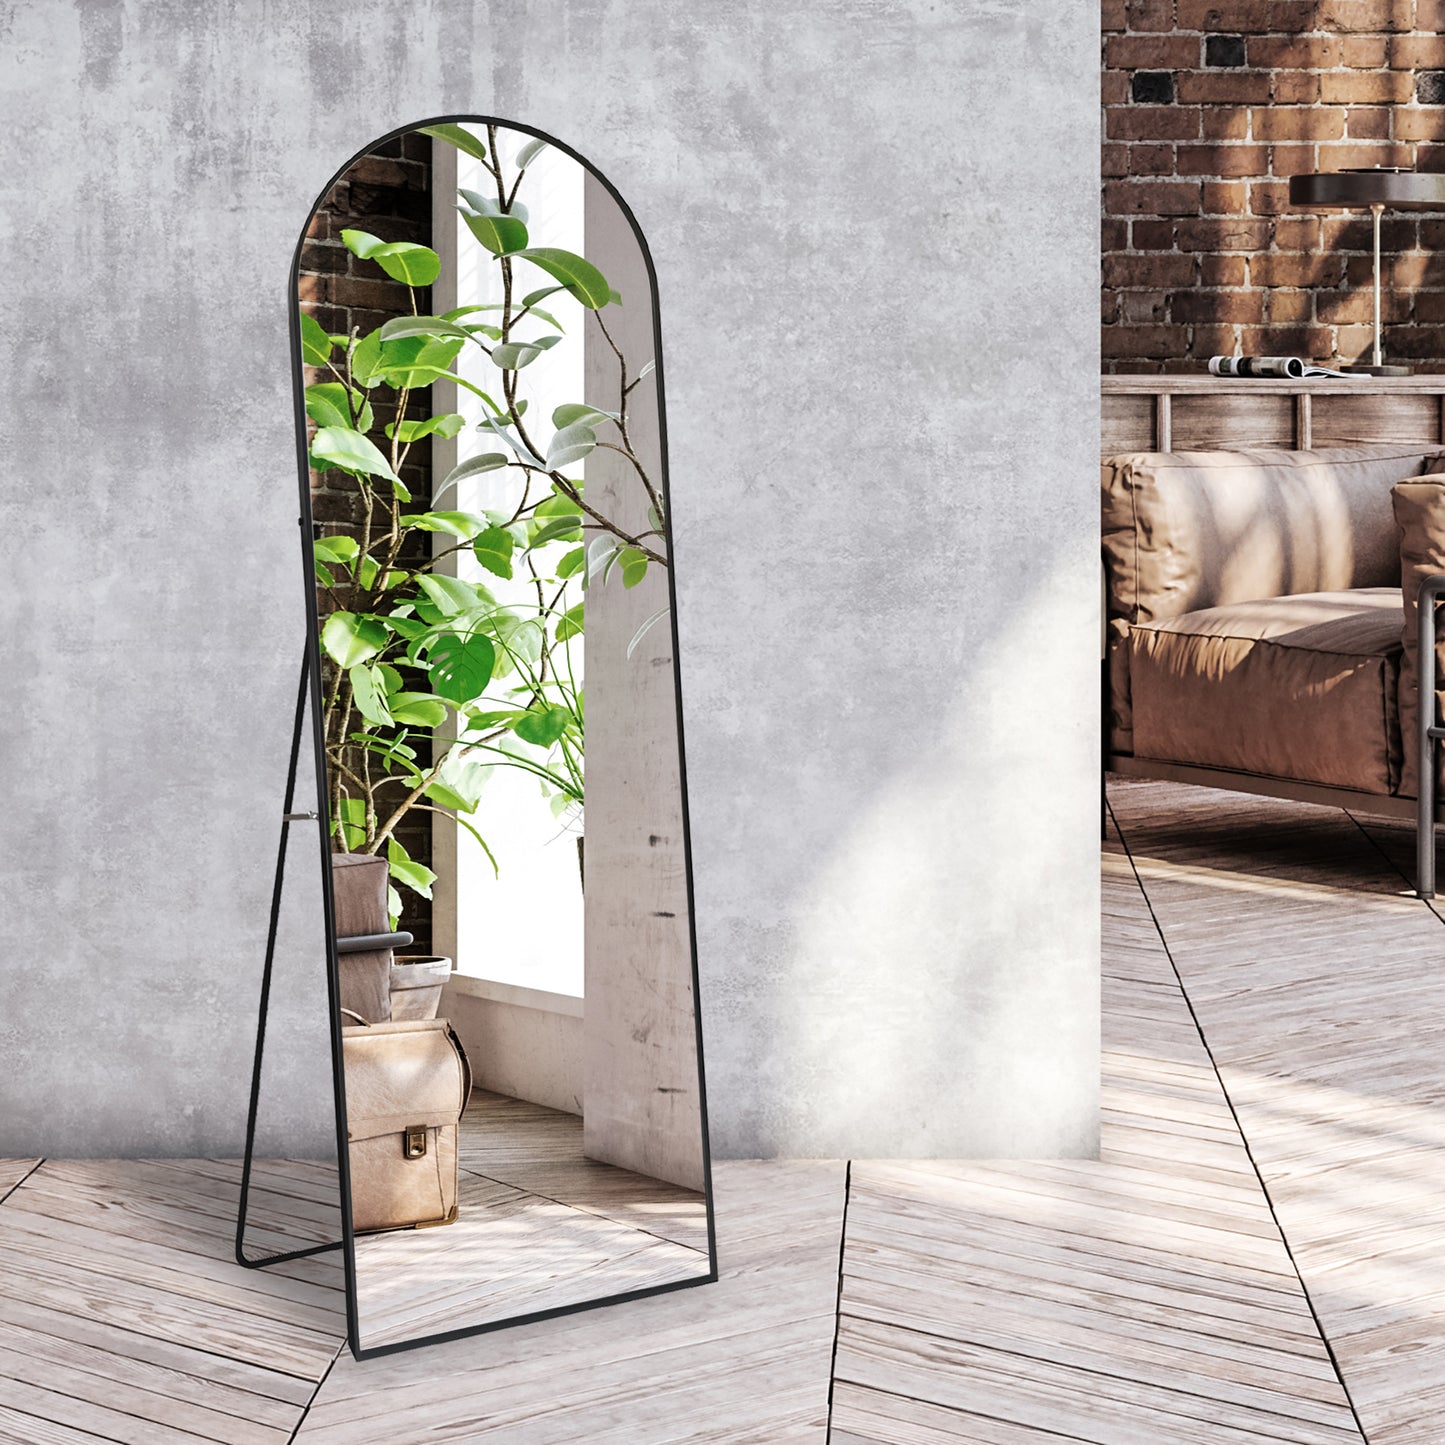 Full Length Mirror With Stand - Full Body Mirror for Bedroom, Living Room - 5ft Tall Mirror Full Body - Large Mirror Full Length